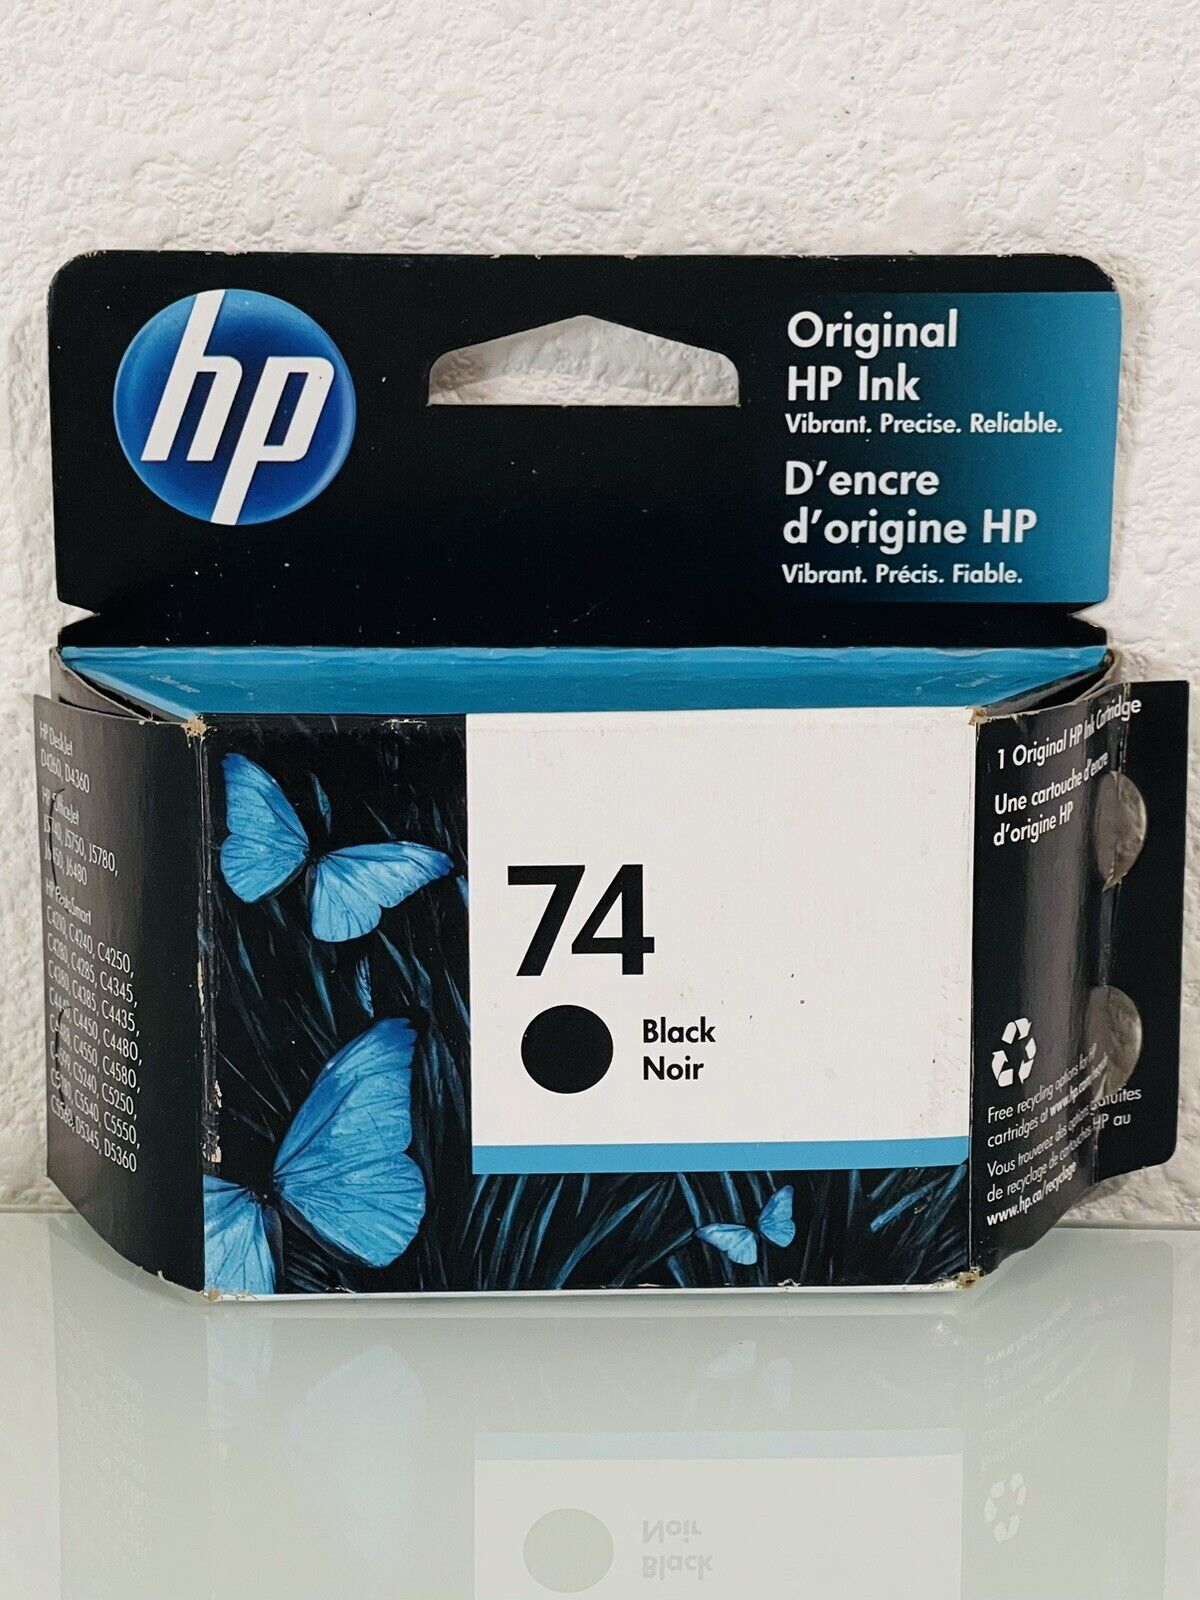 Genuine HP 74 (CB335WN) Black Noir Ink Cartridge EXP 11/2023